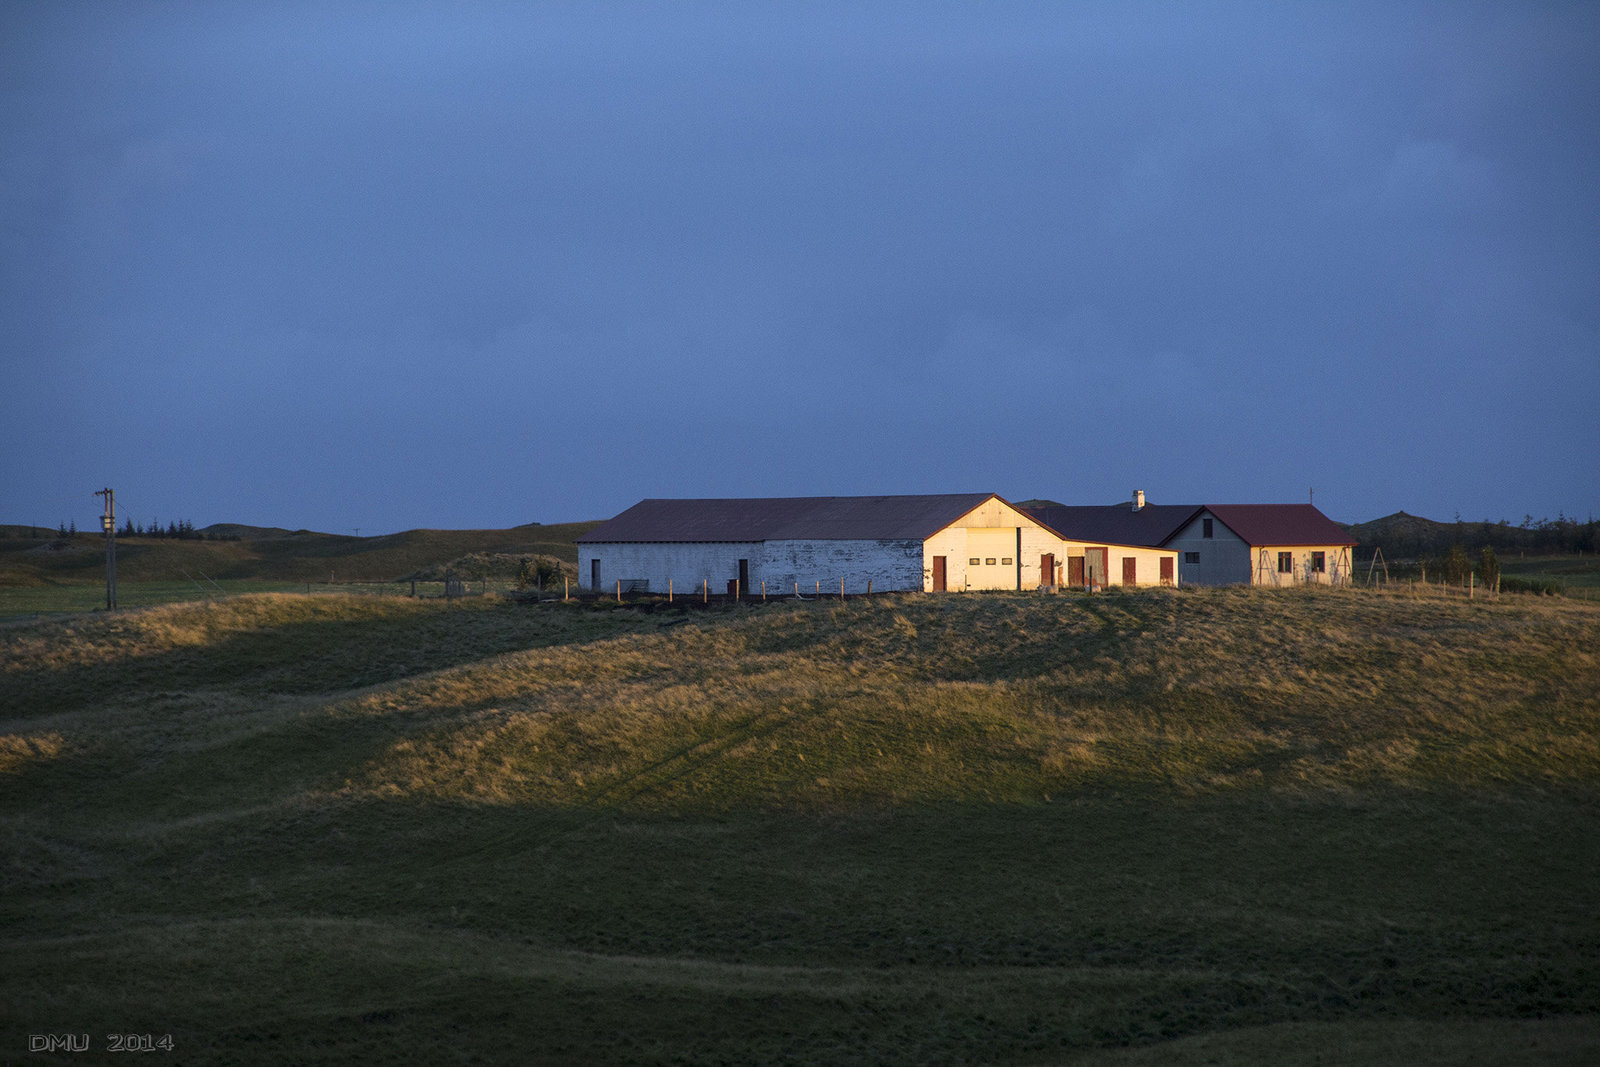 Icelandic Farm in the Sunset